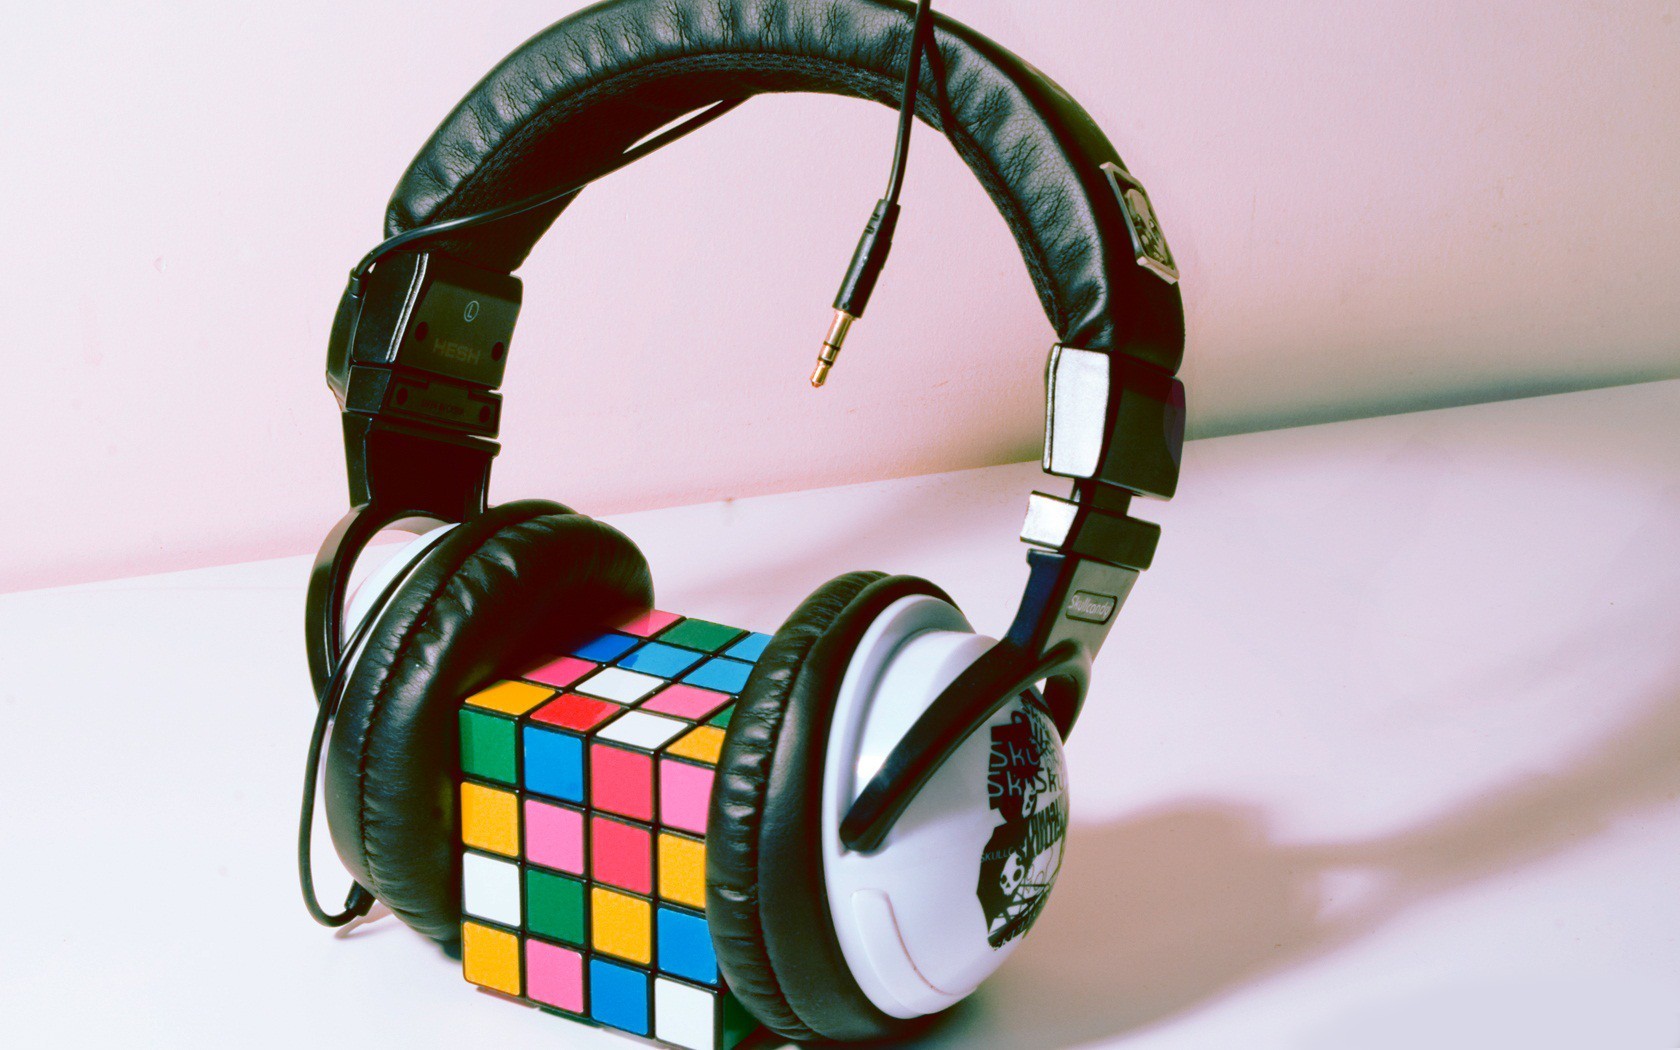 General 1680x1050 headphones Rubik's Cube simple background wires colorful cube 3D Blocks audio-technica